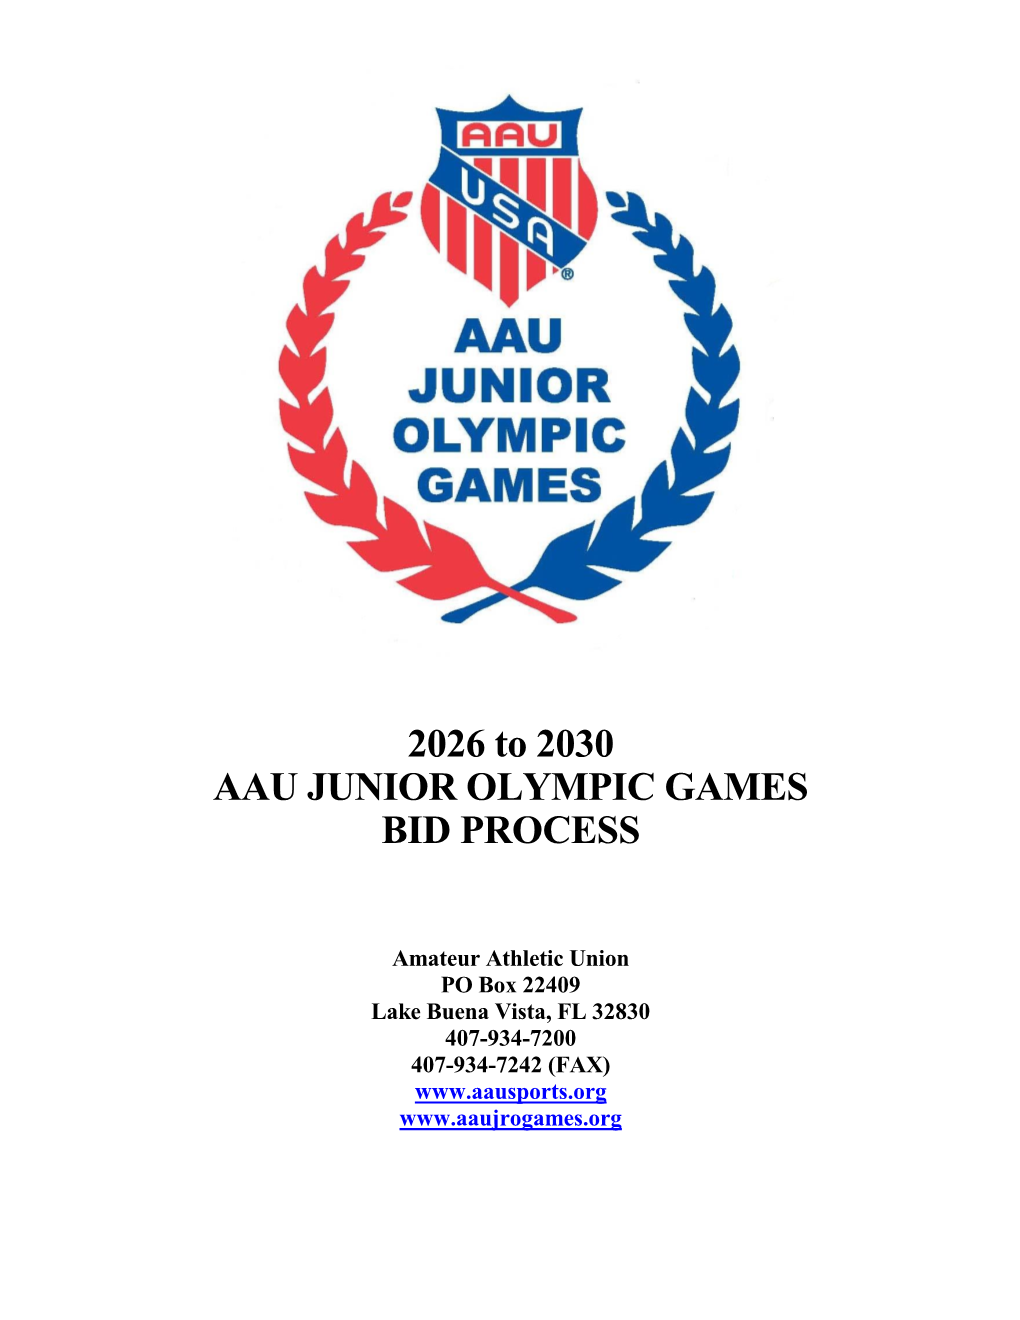 2026 to 2030 AAU JUNIOR OLYMPIC GAMES BID PROCESS